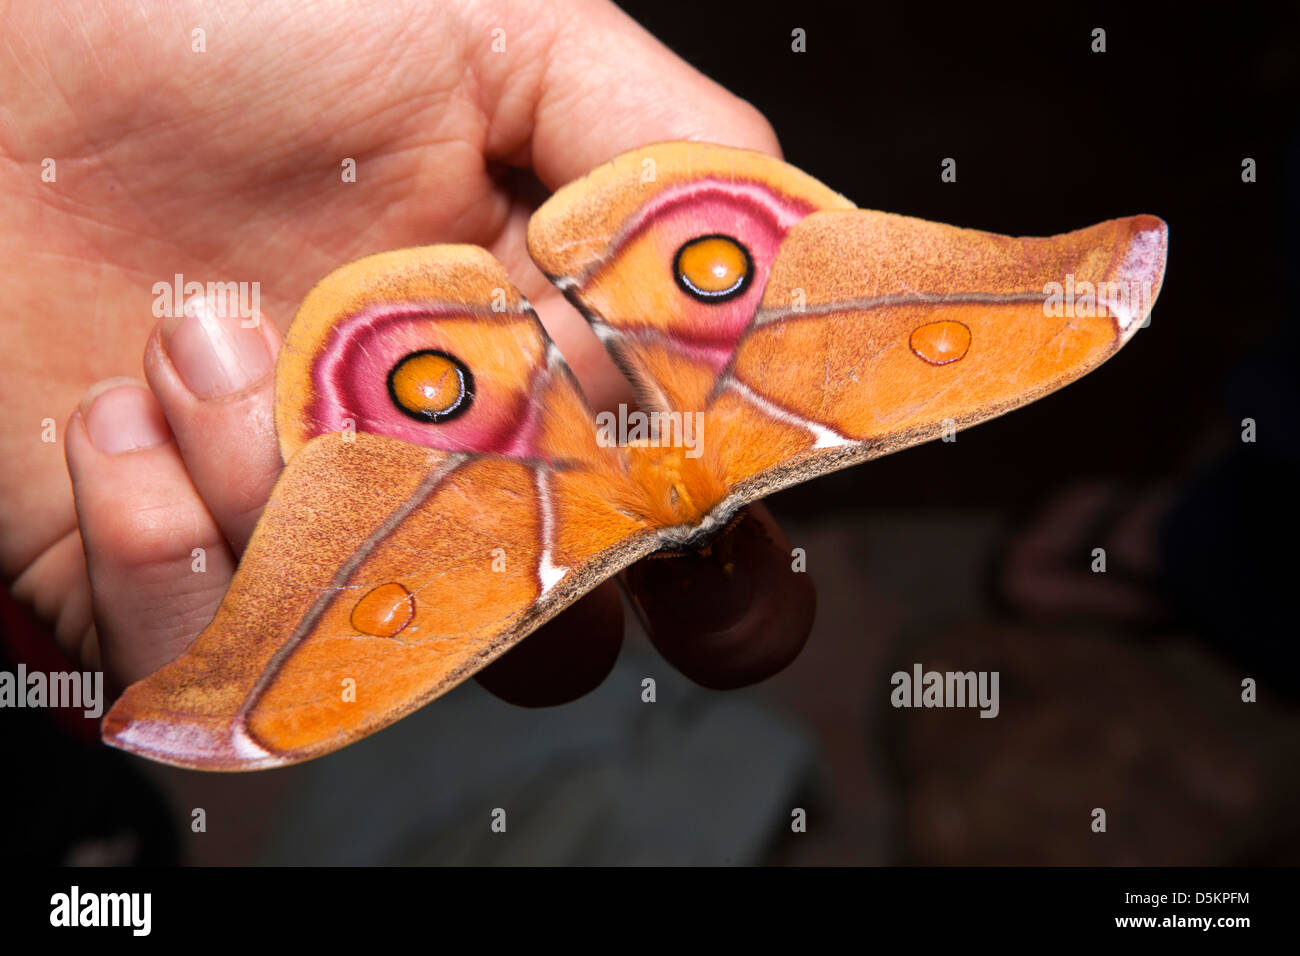 Madagascar, Nosy Be, wildlife, Suraka silk moth Antherina suraka of Saturniidae family on hand Stock Photo